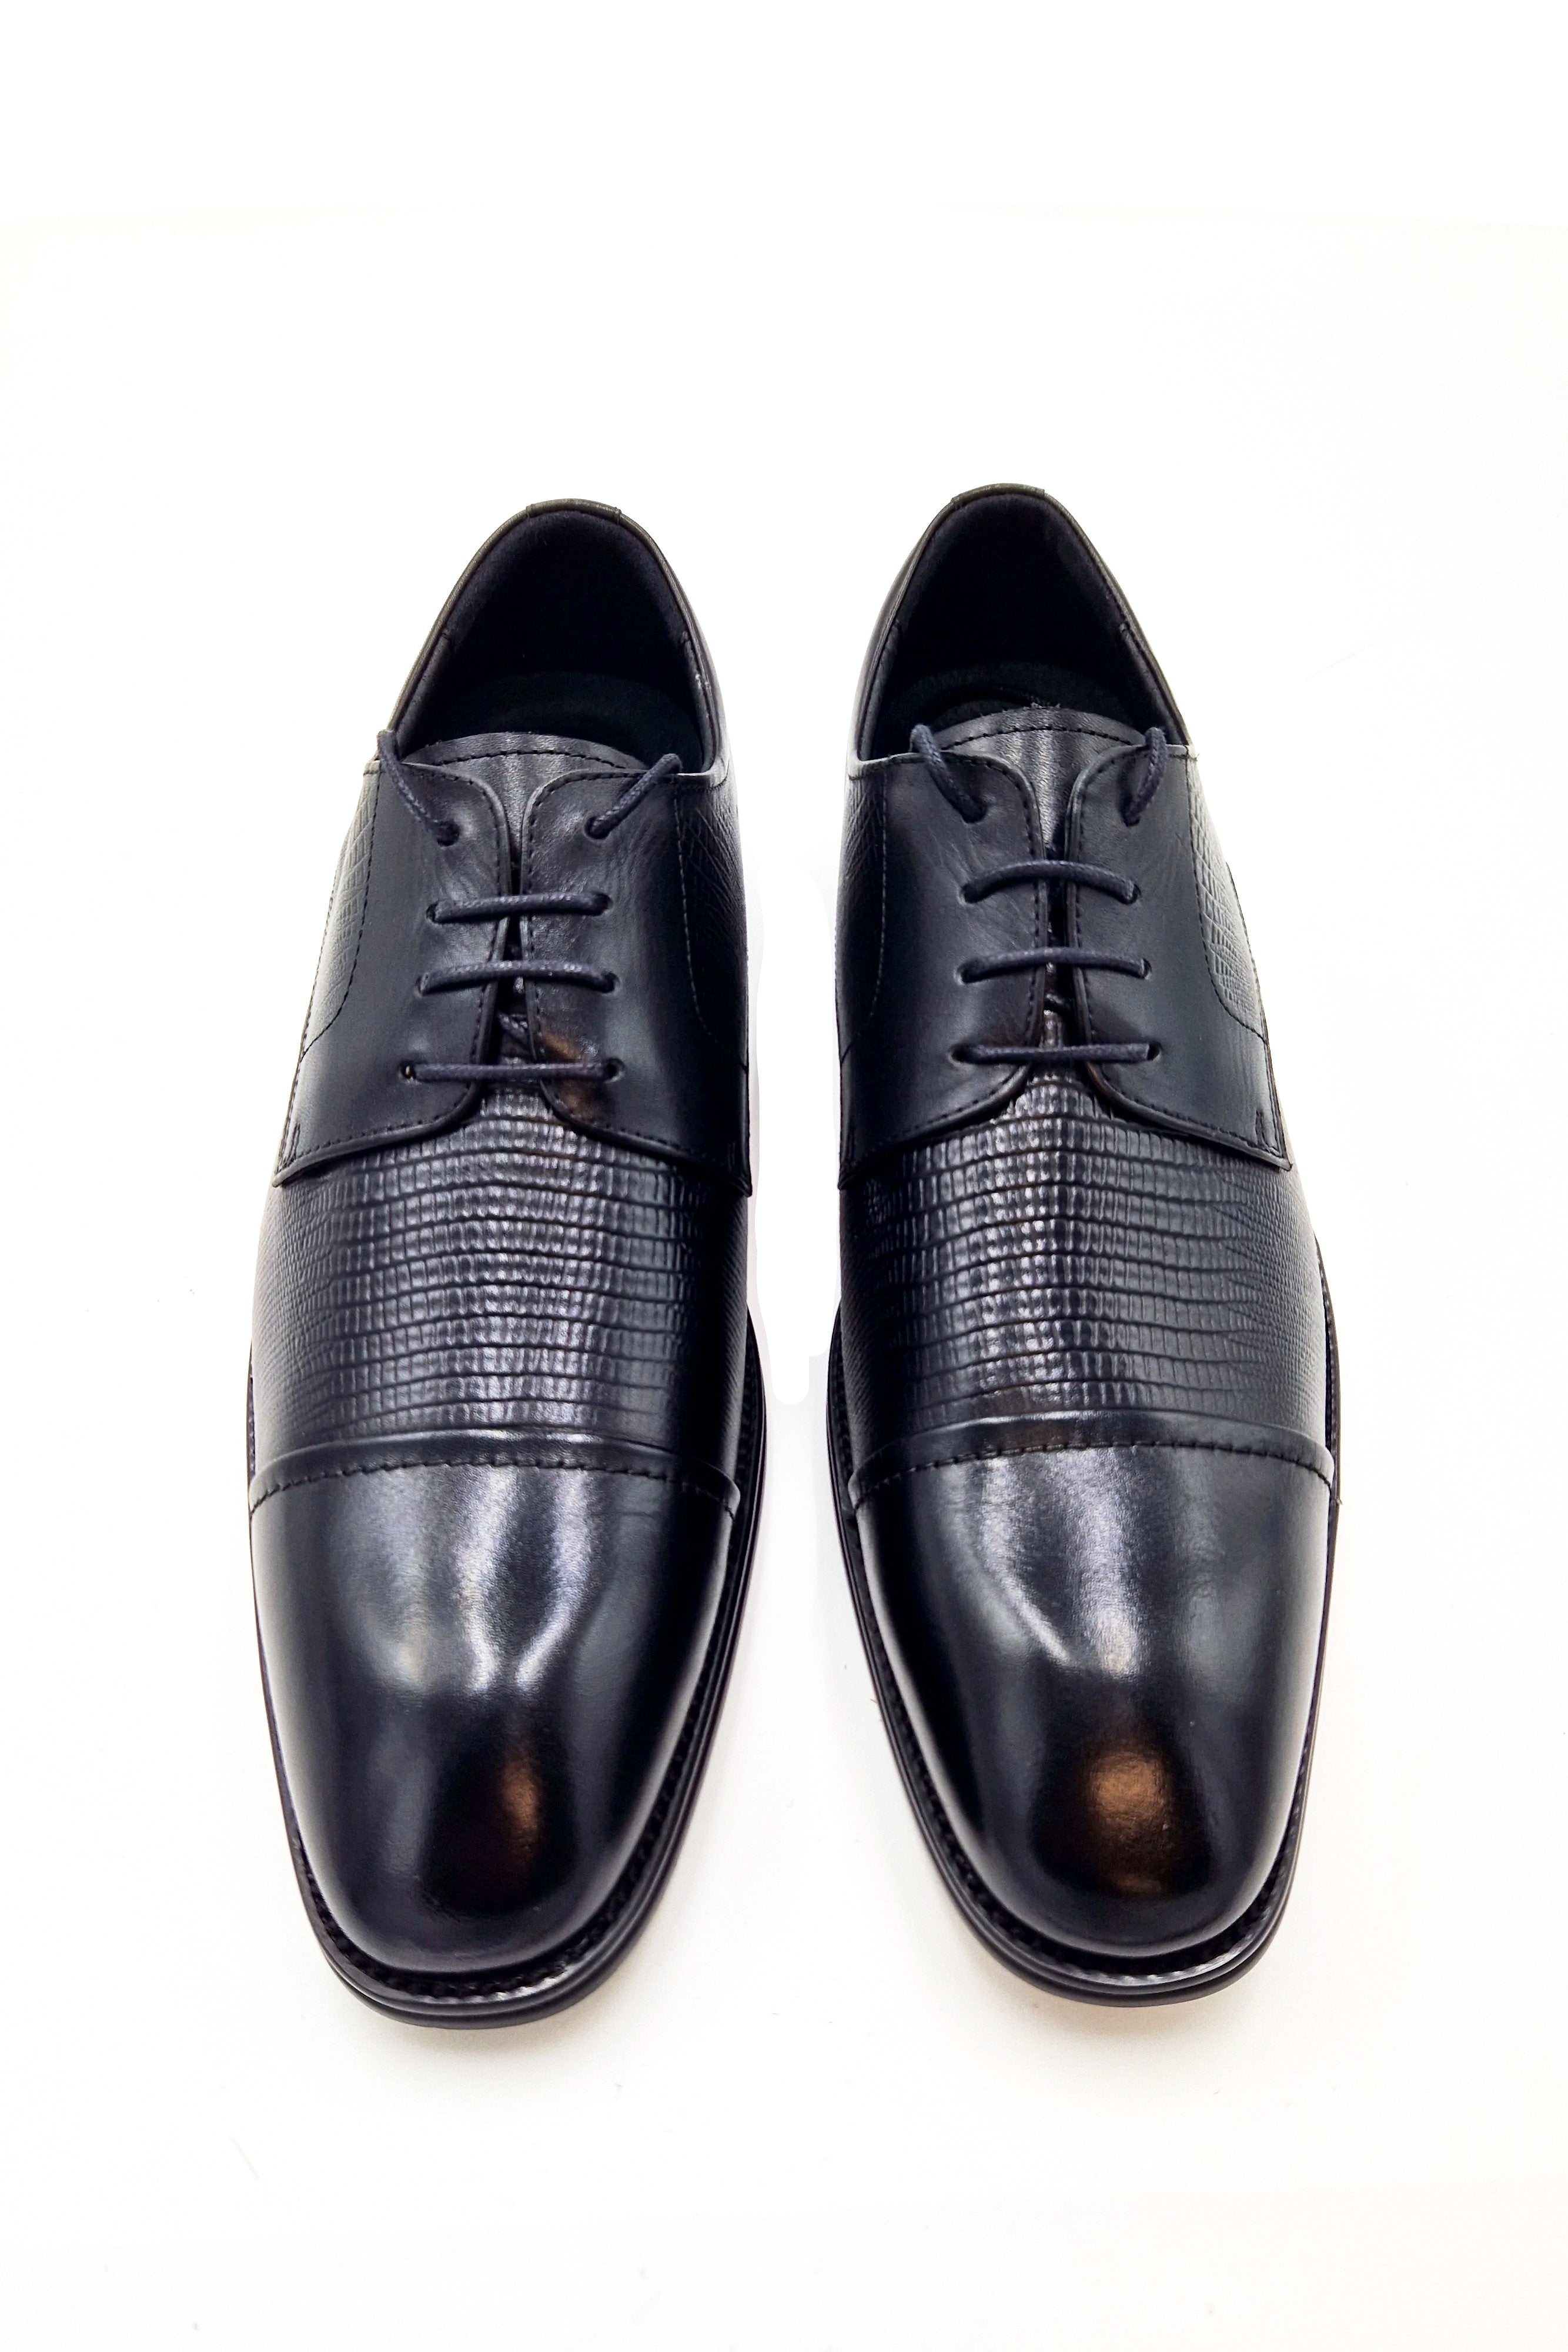 Eton Mens Formal Shoe Black Leather by 6th Sense front